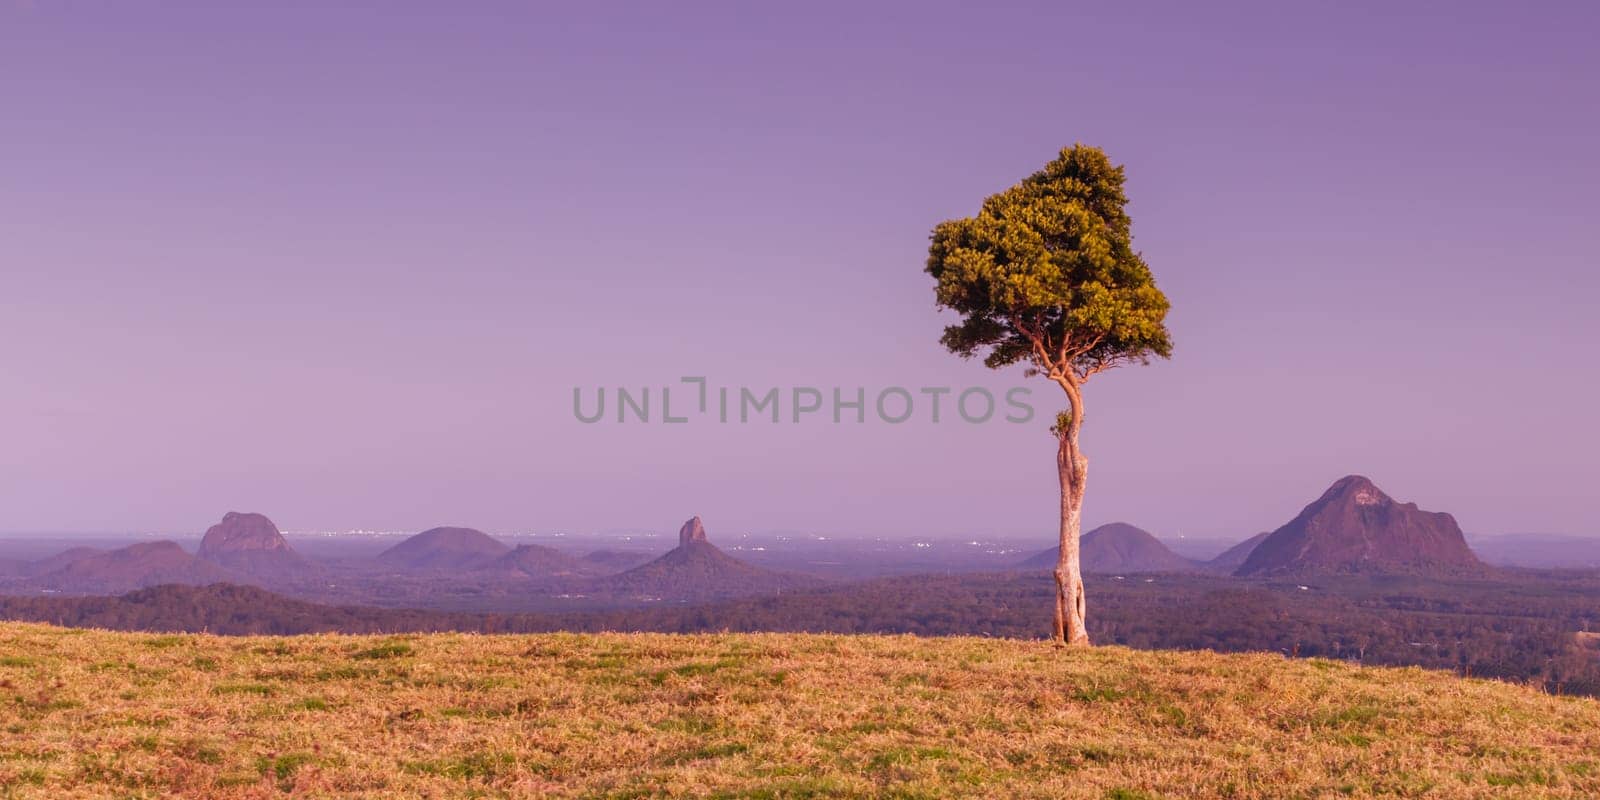 One Tree Hill in Queensland Australia by FiledIMAGE